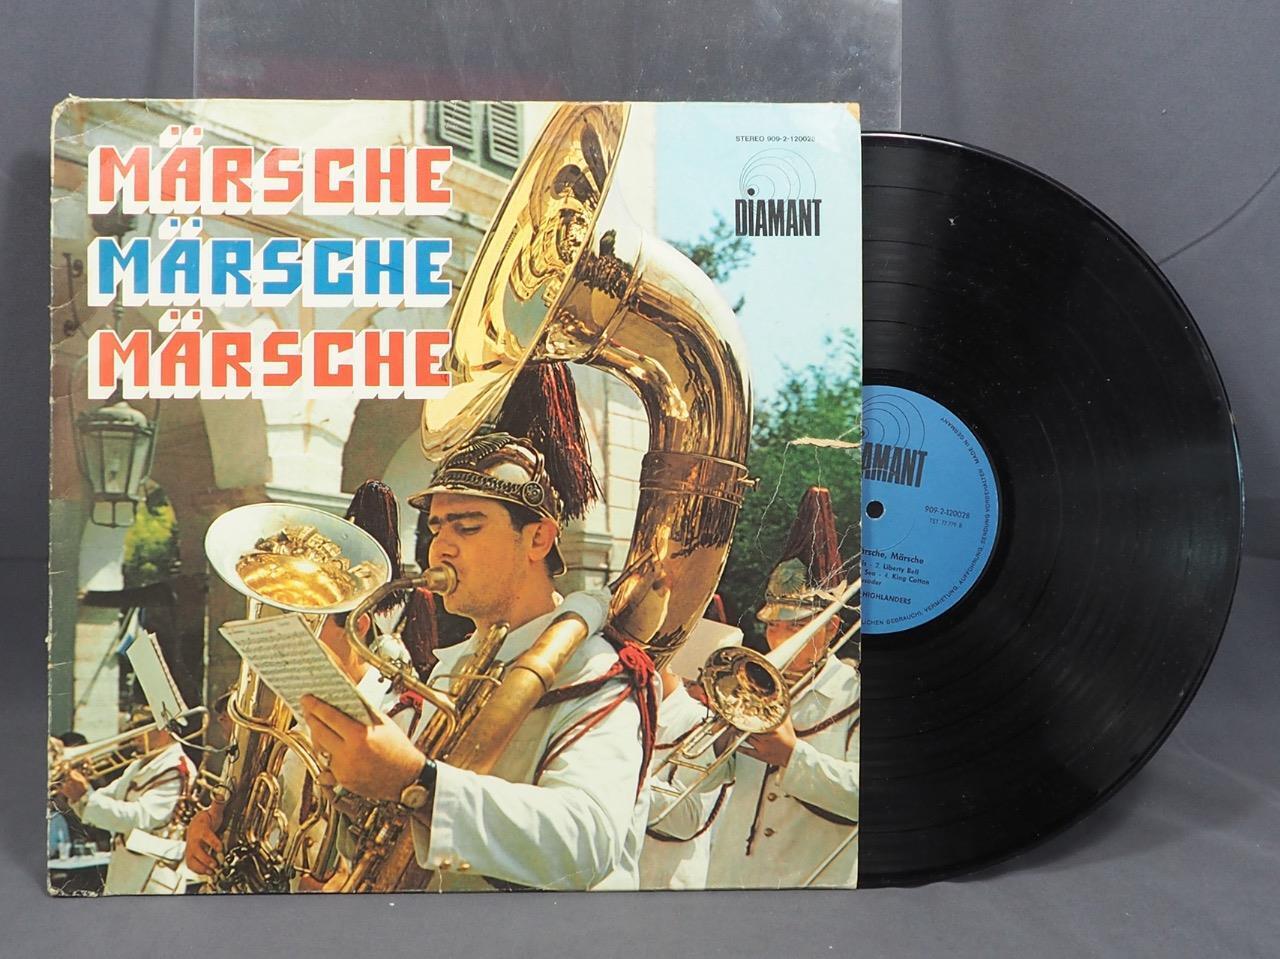 Vintage Marsche Marsche Marsche Hungarian Import Vinyl LP Record Album